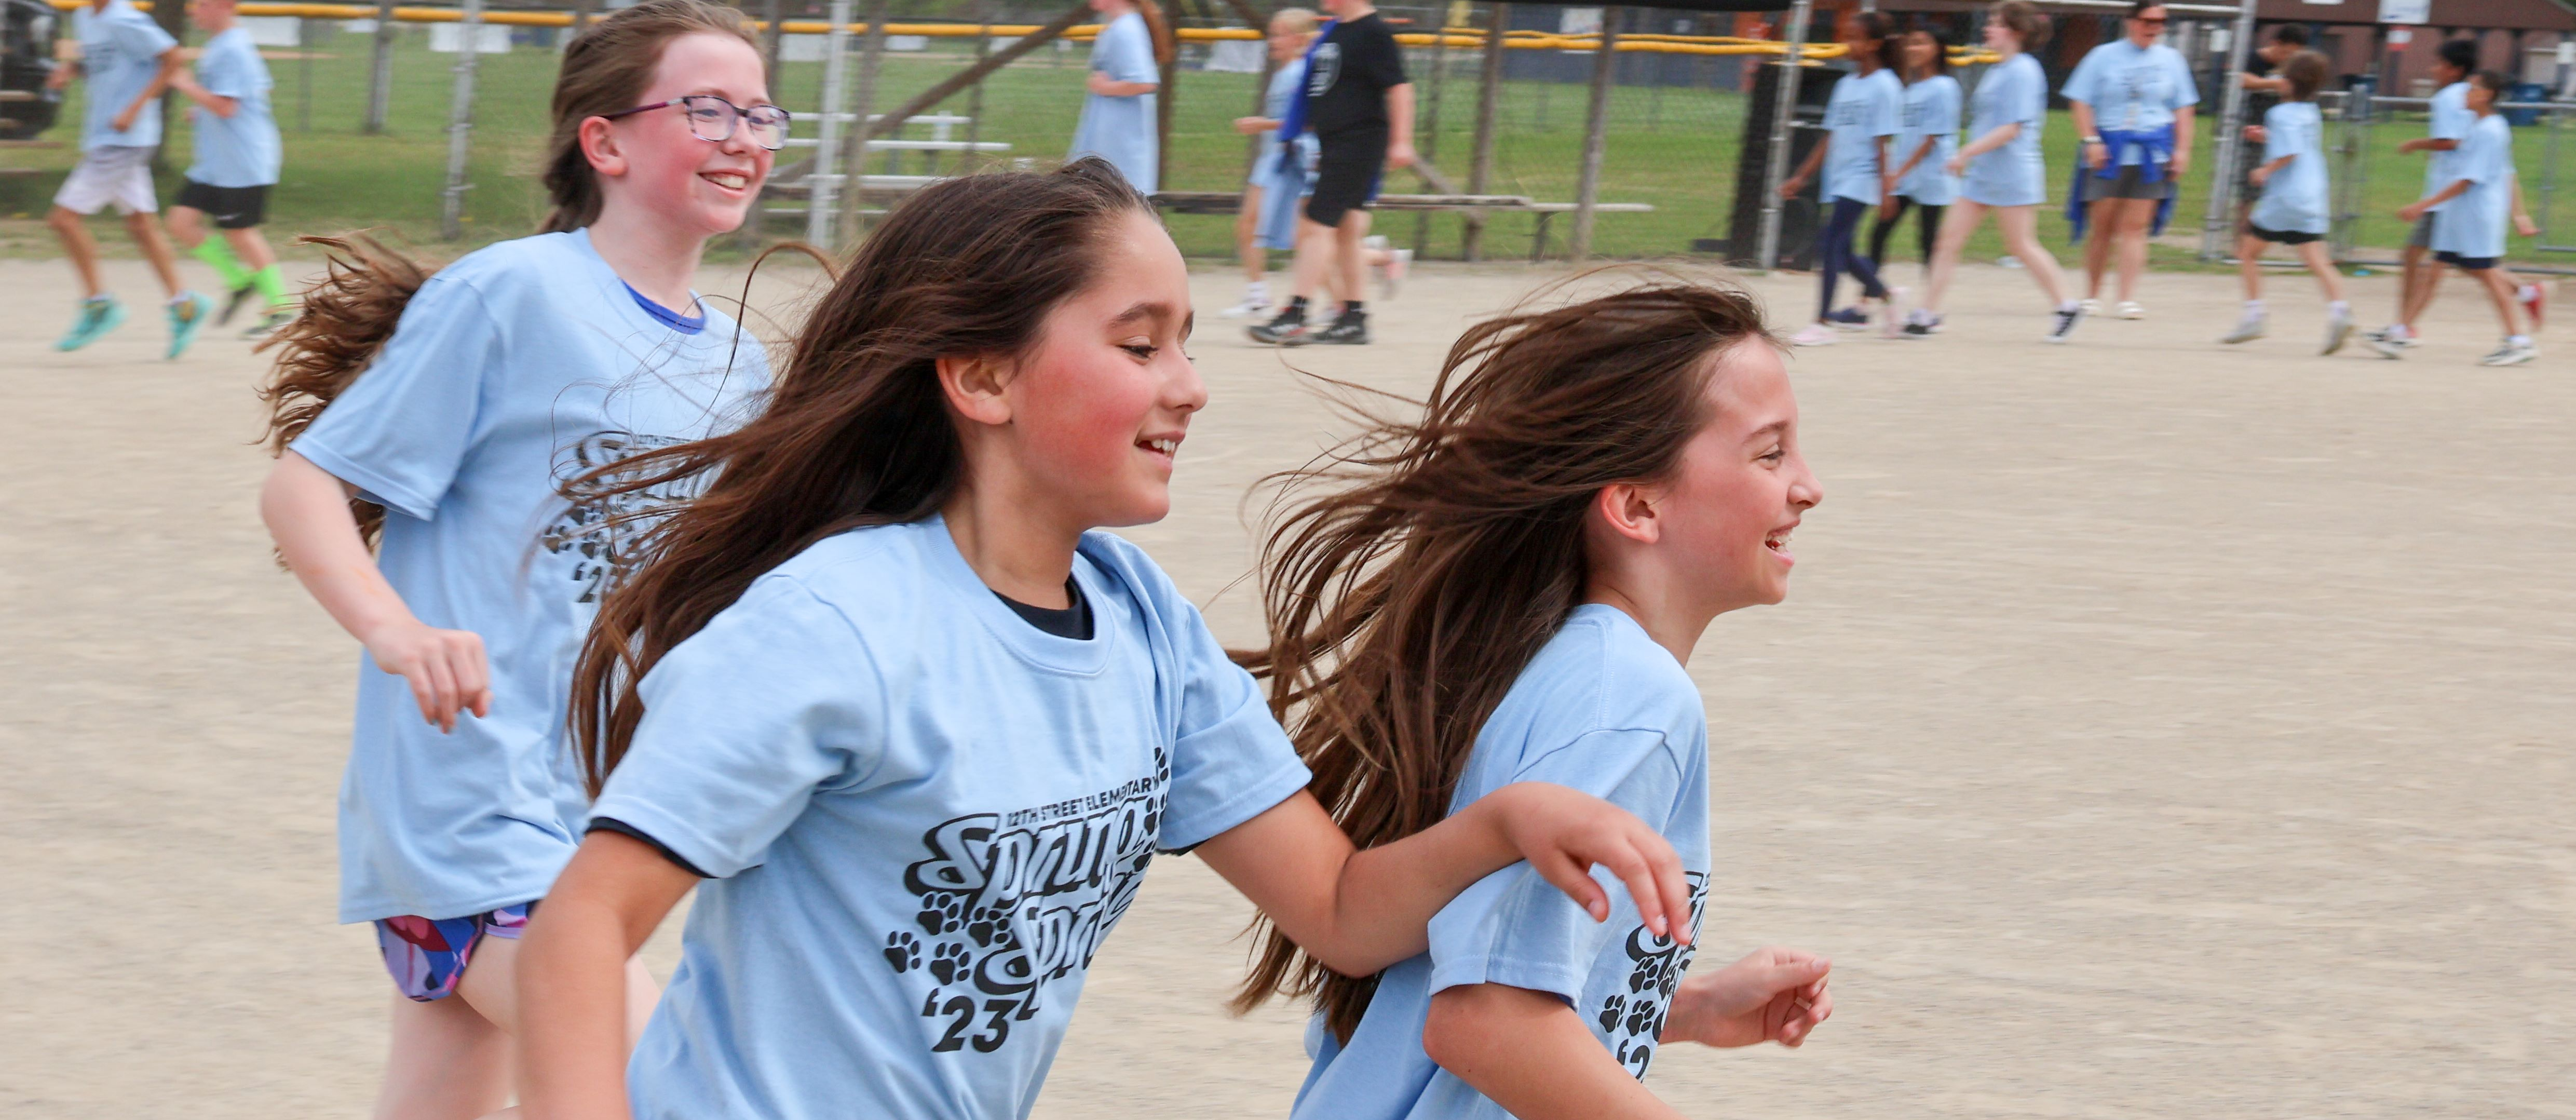 Students run at the Spring Sprint